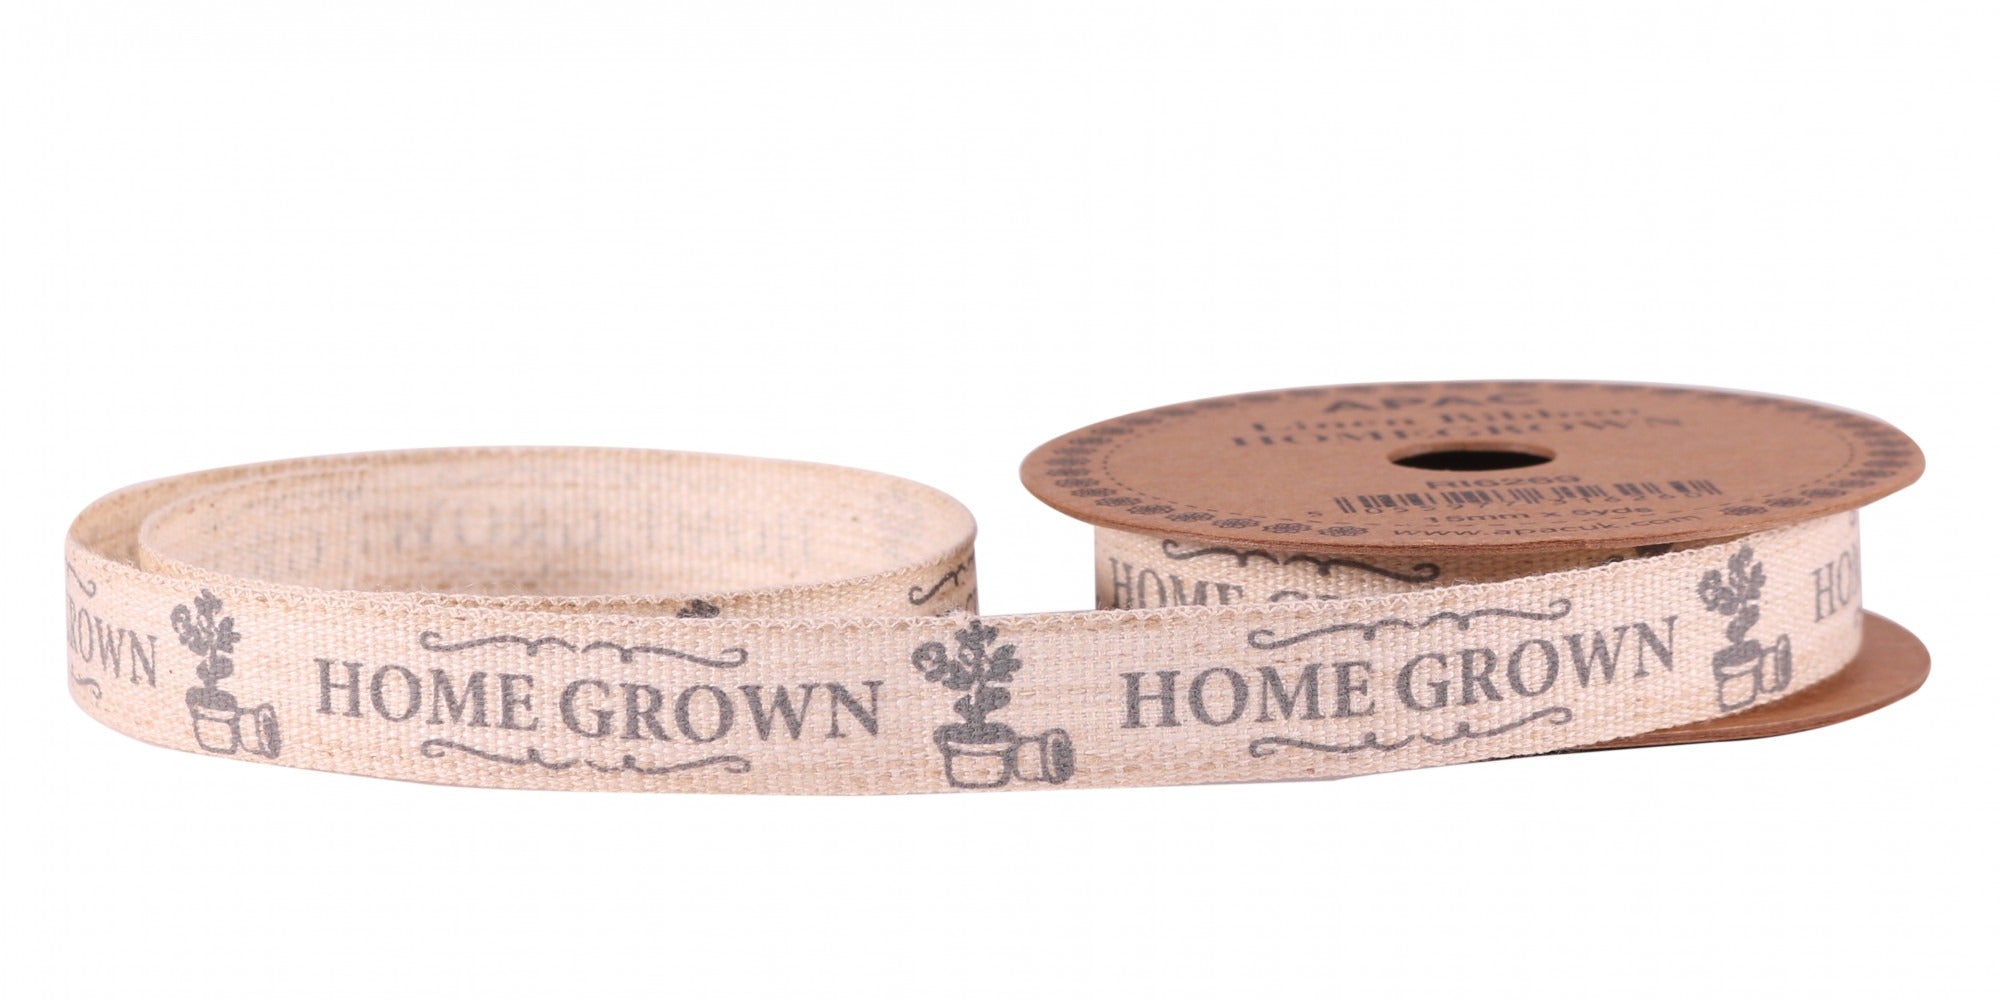 View Homegrown Grey Linen Ribbon 15mm information